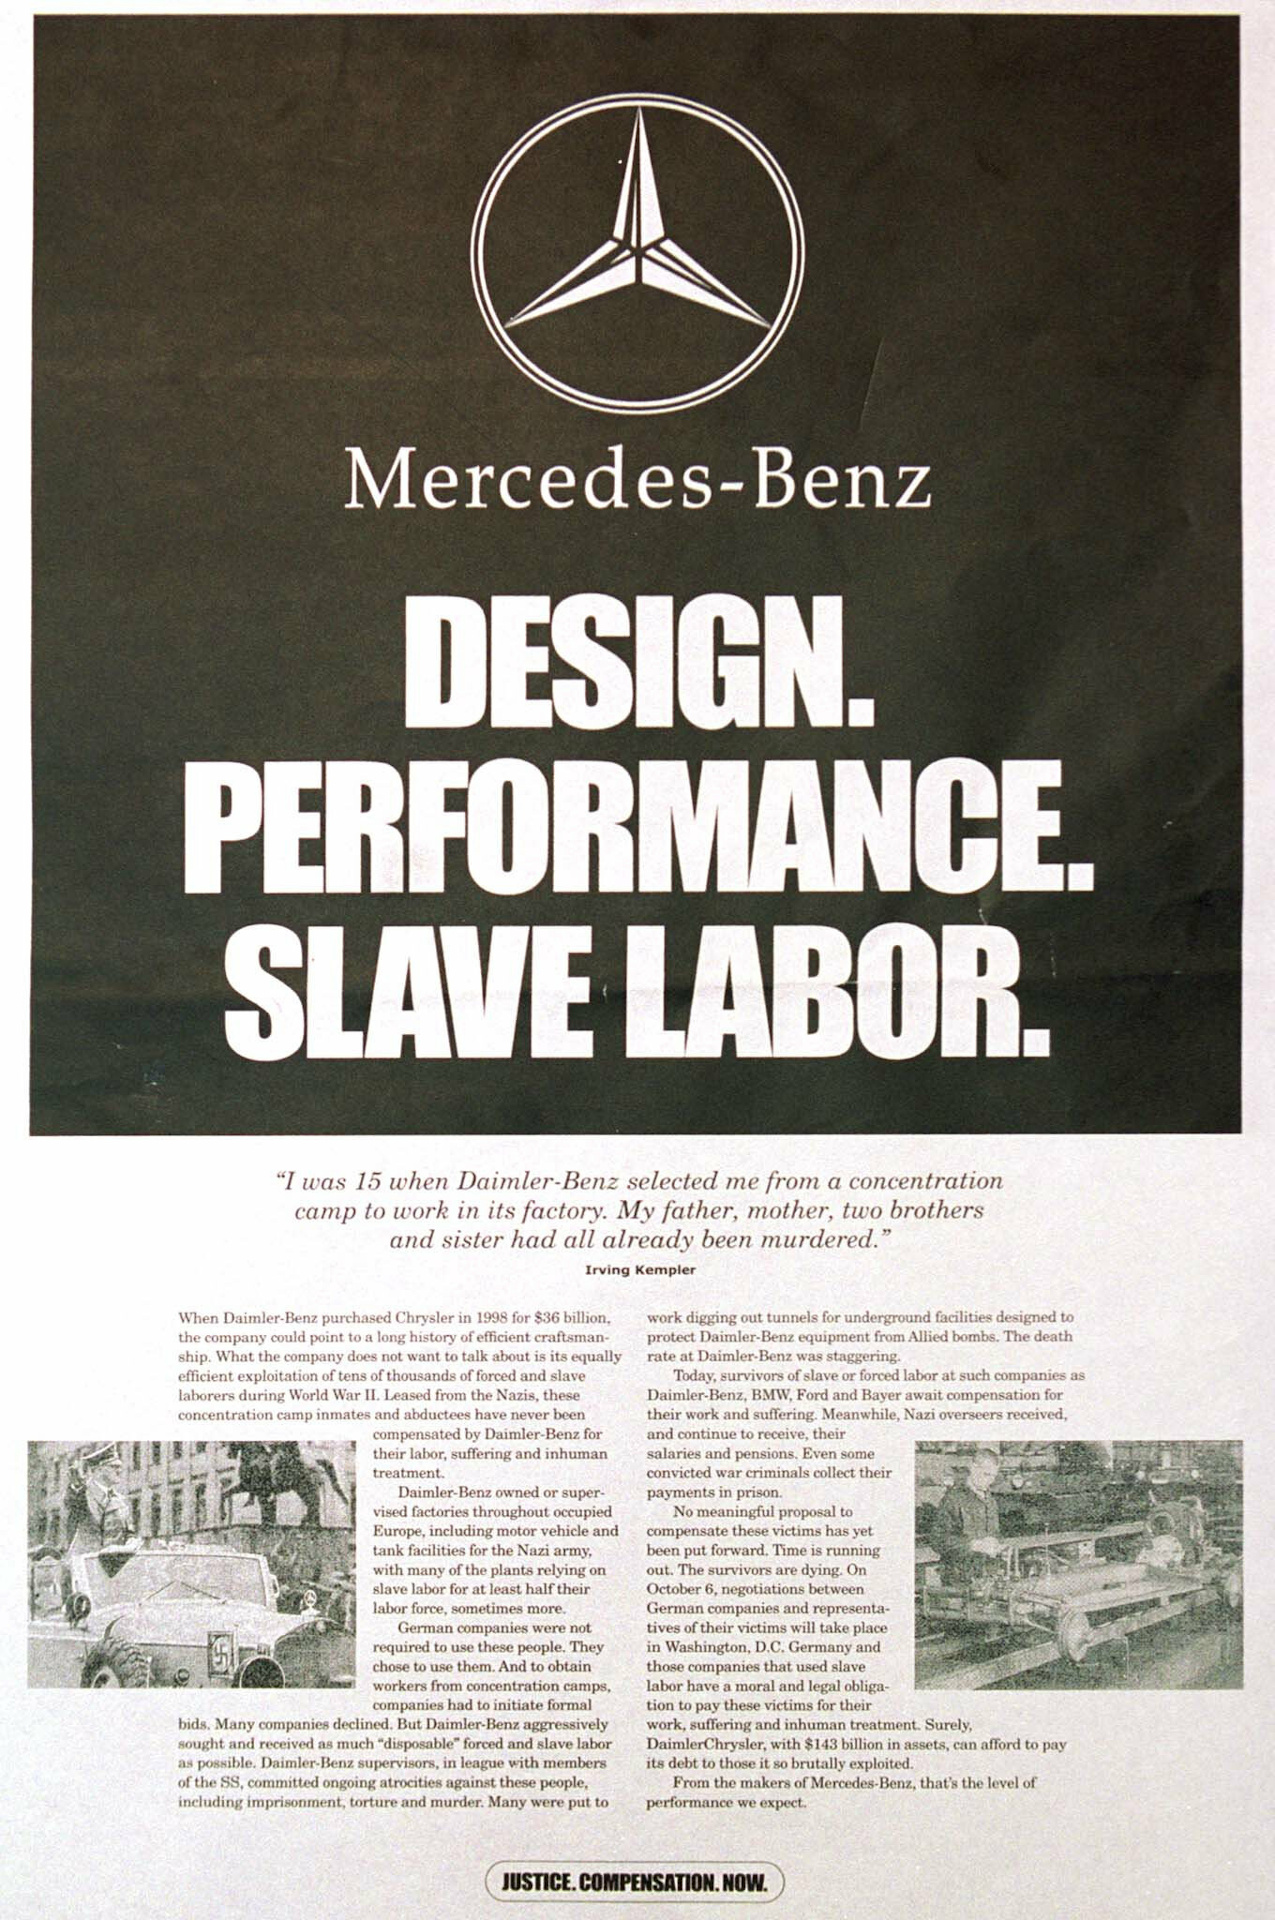 A newspaper advertisement titled “Mercedes-Benz. Design. Performance. Slave Labor.”